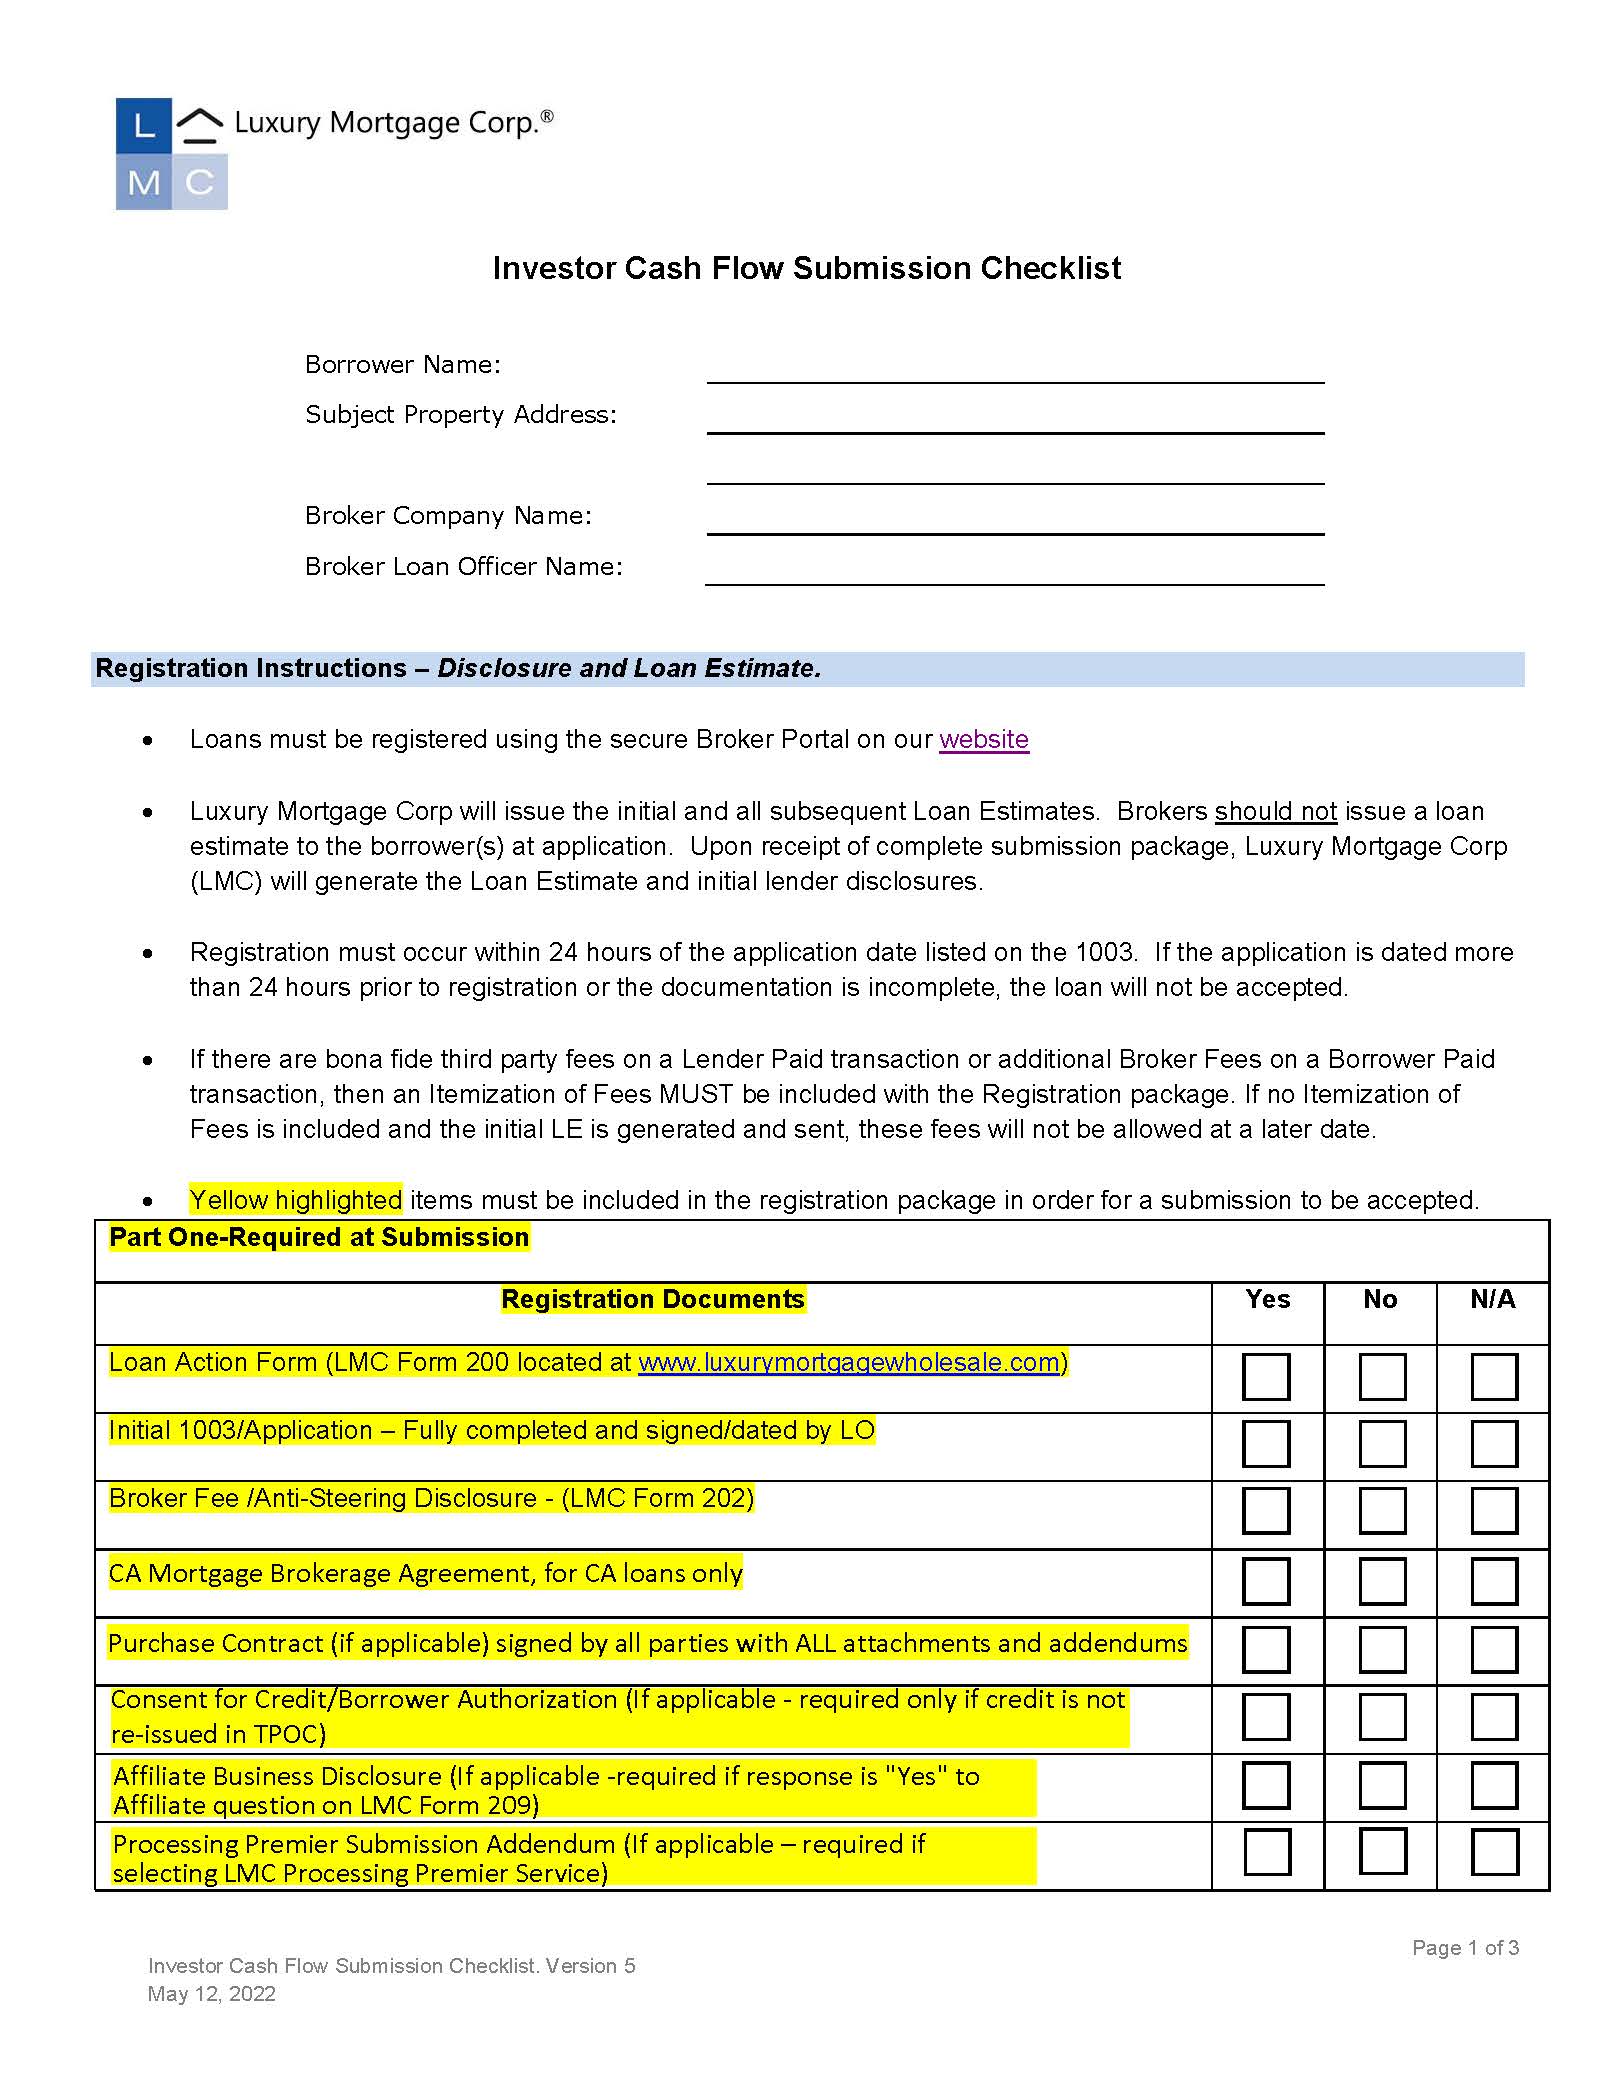 Investor Cash Flow Submission Checklist V.5